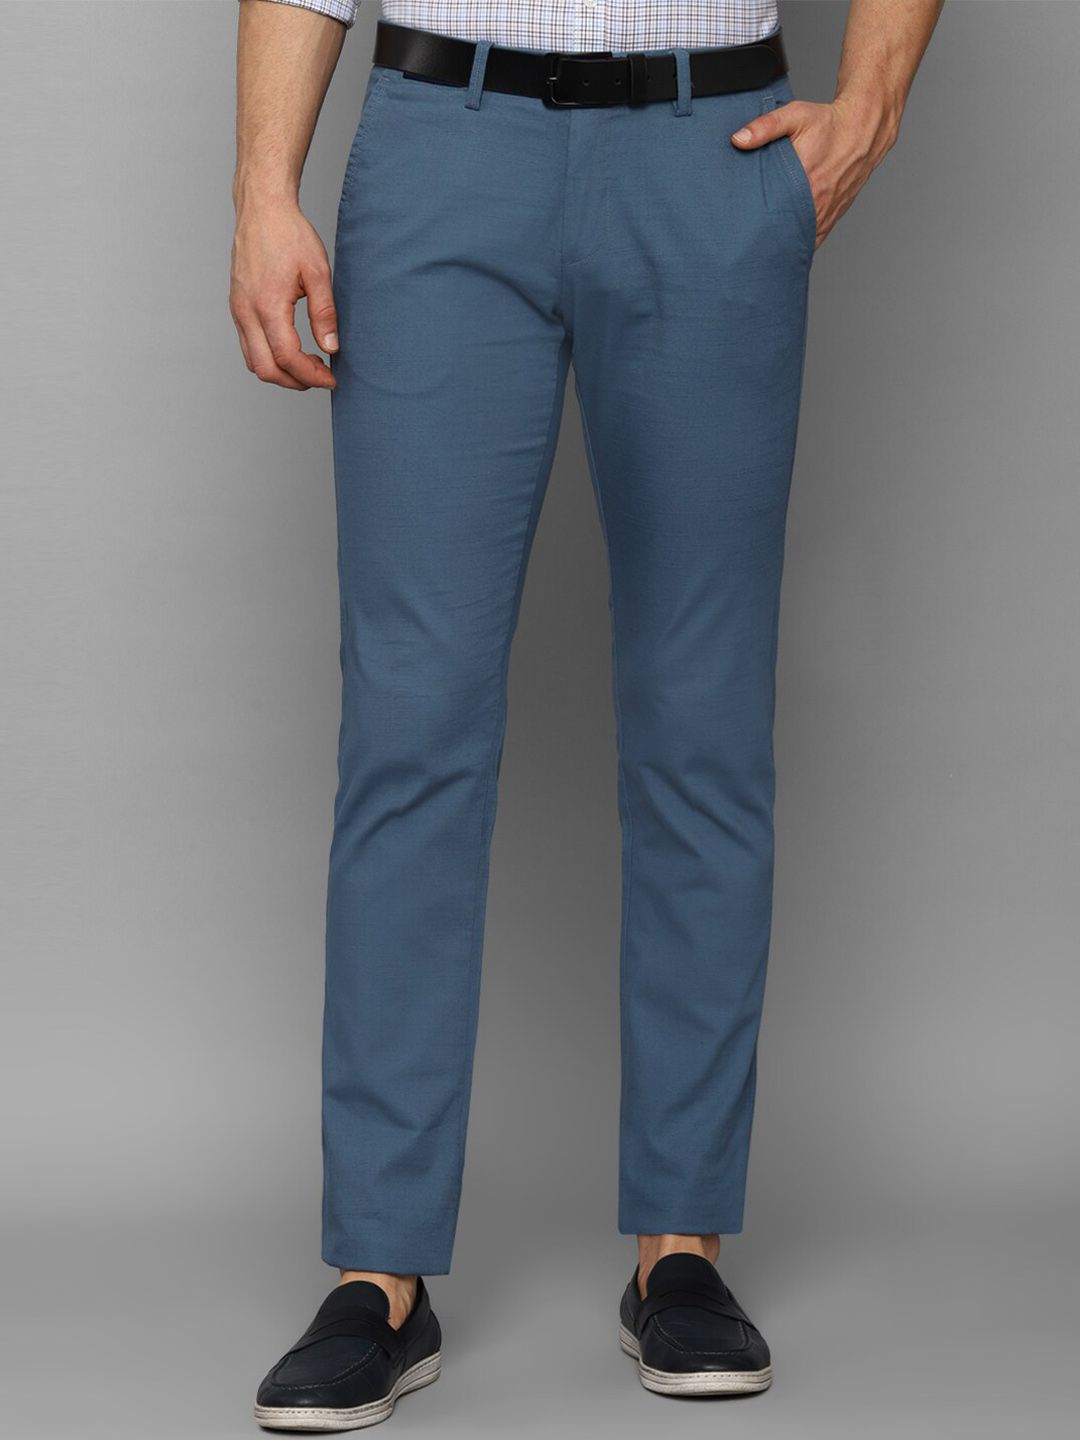 Allen Solly Men Blue Textured Slim Fit Trousers